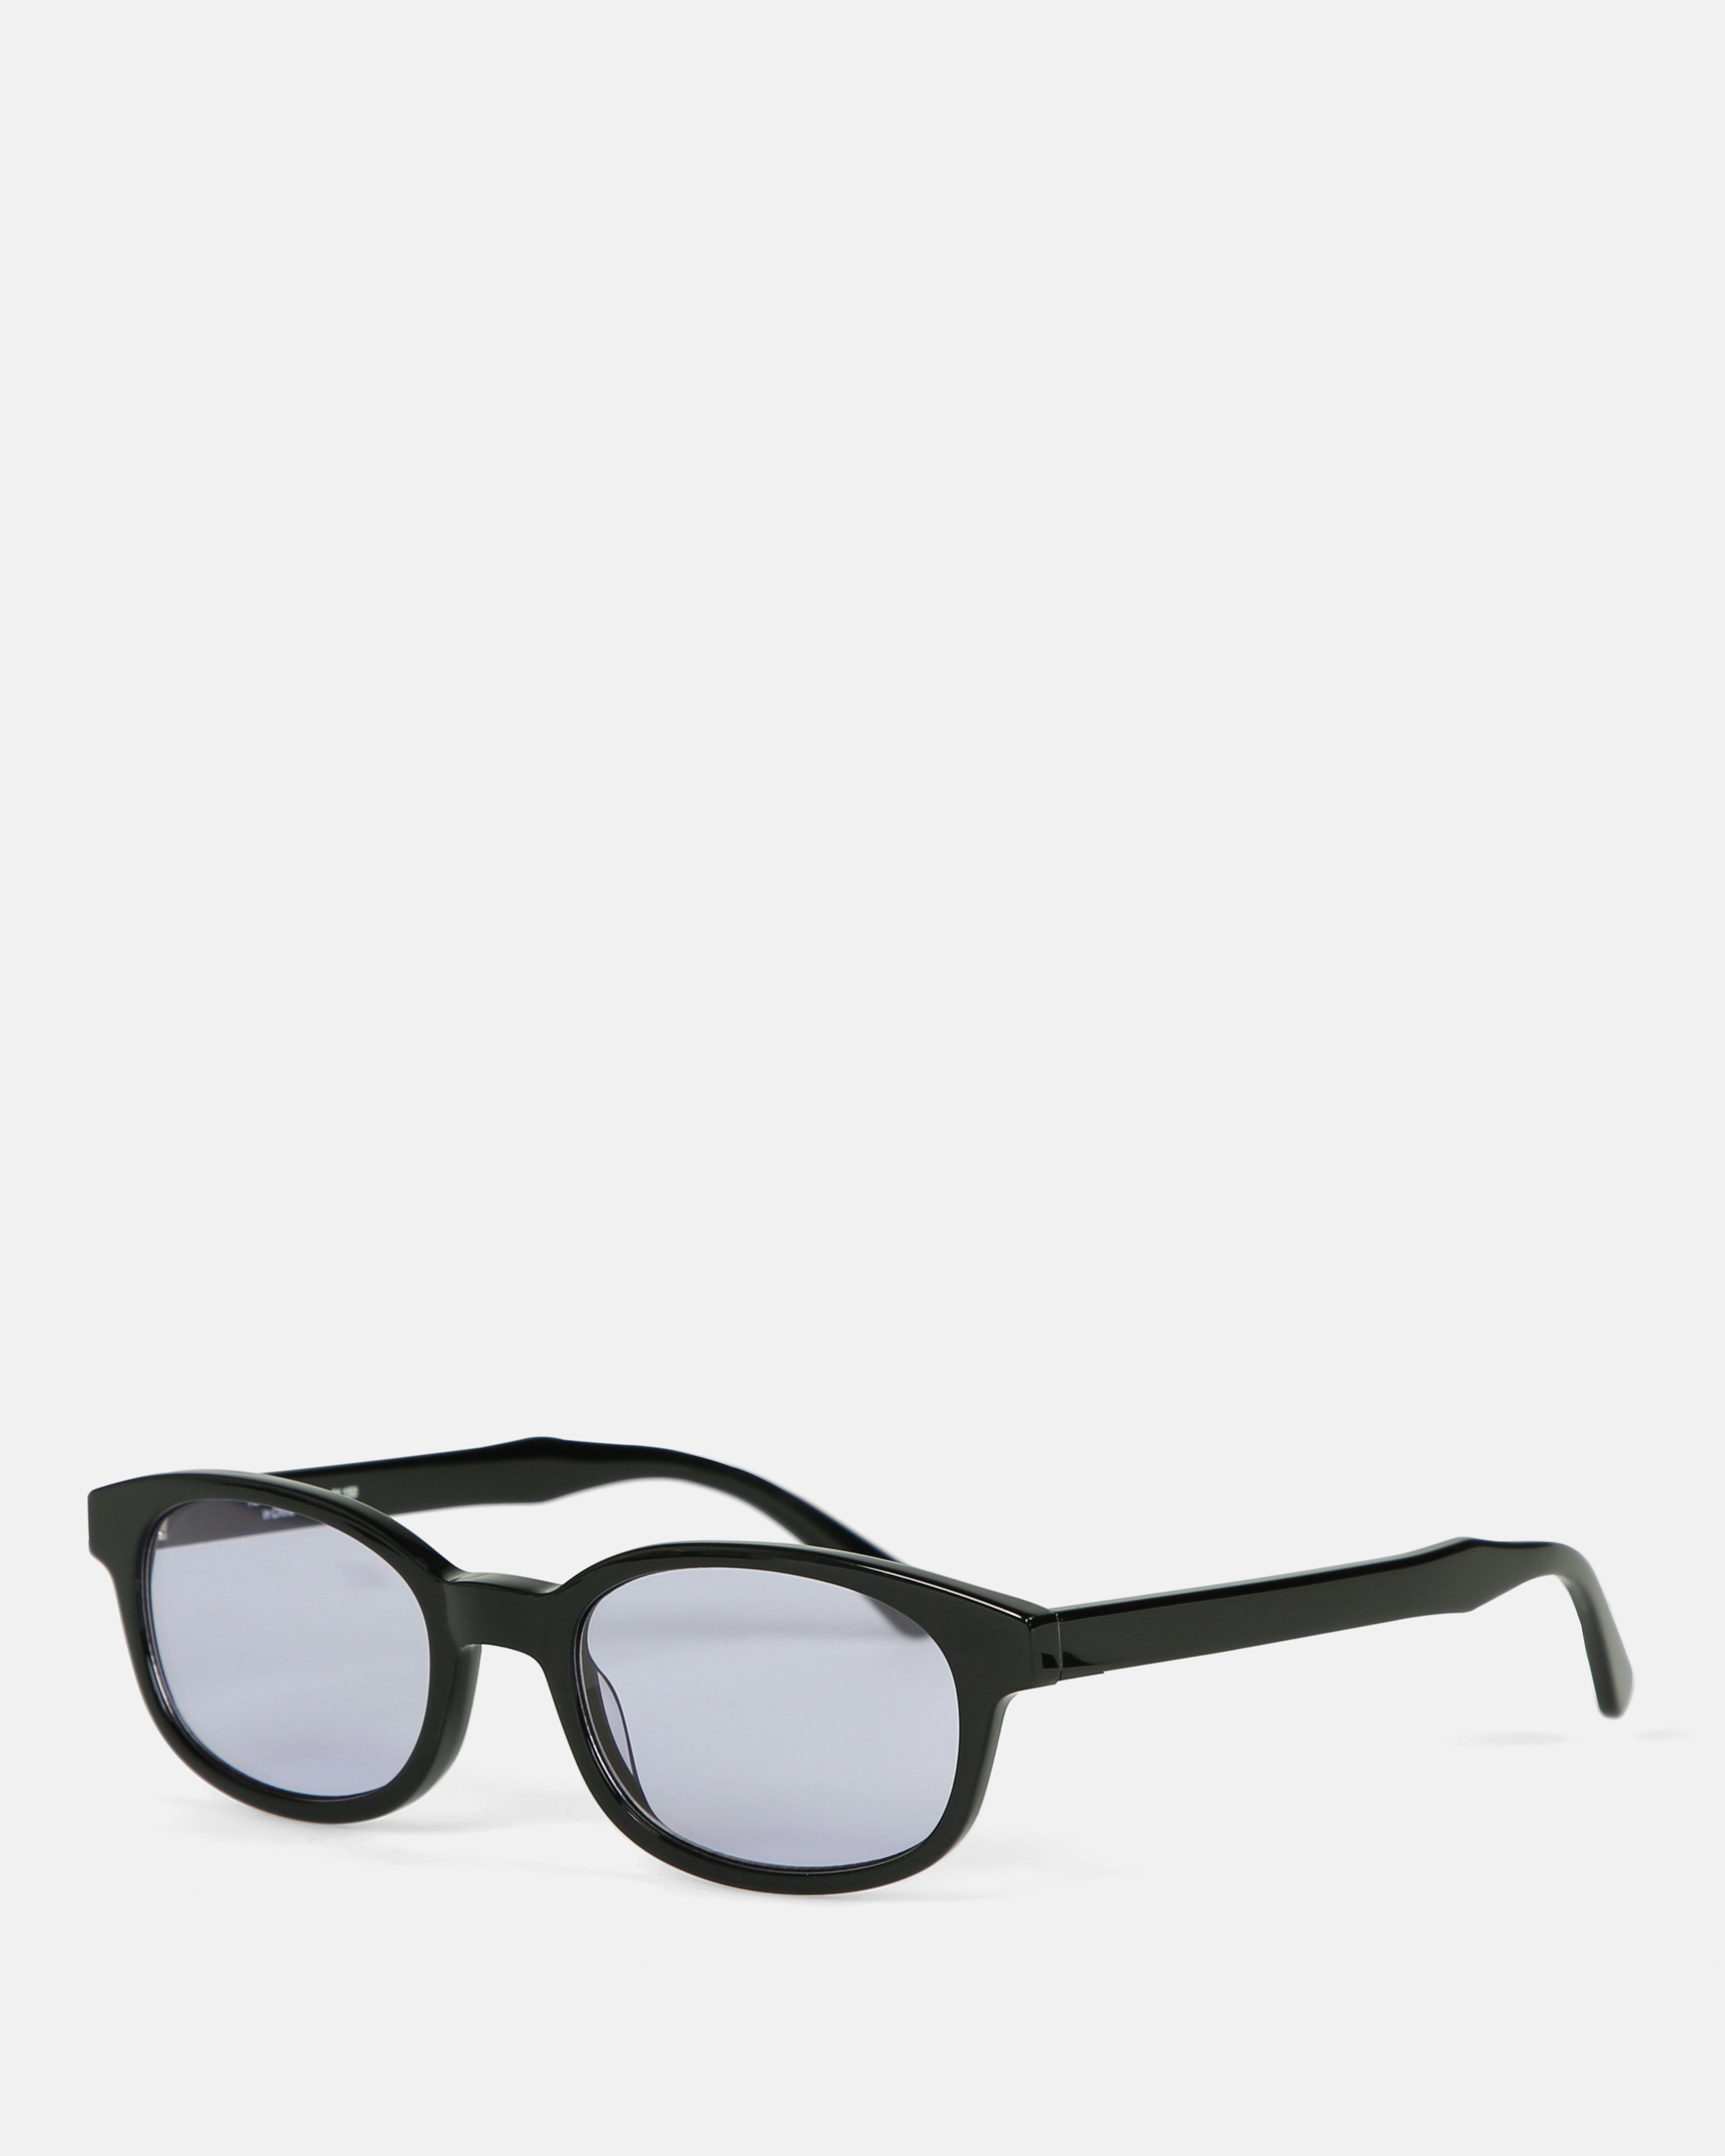 Noon Goons Sunglasses - Unibase Lavender | Men | Junkyard